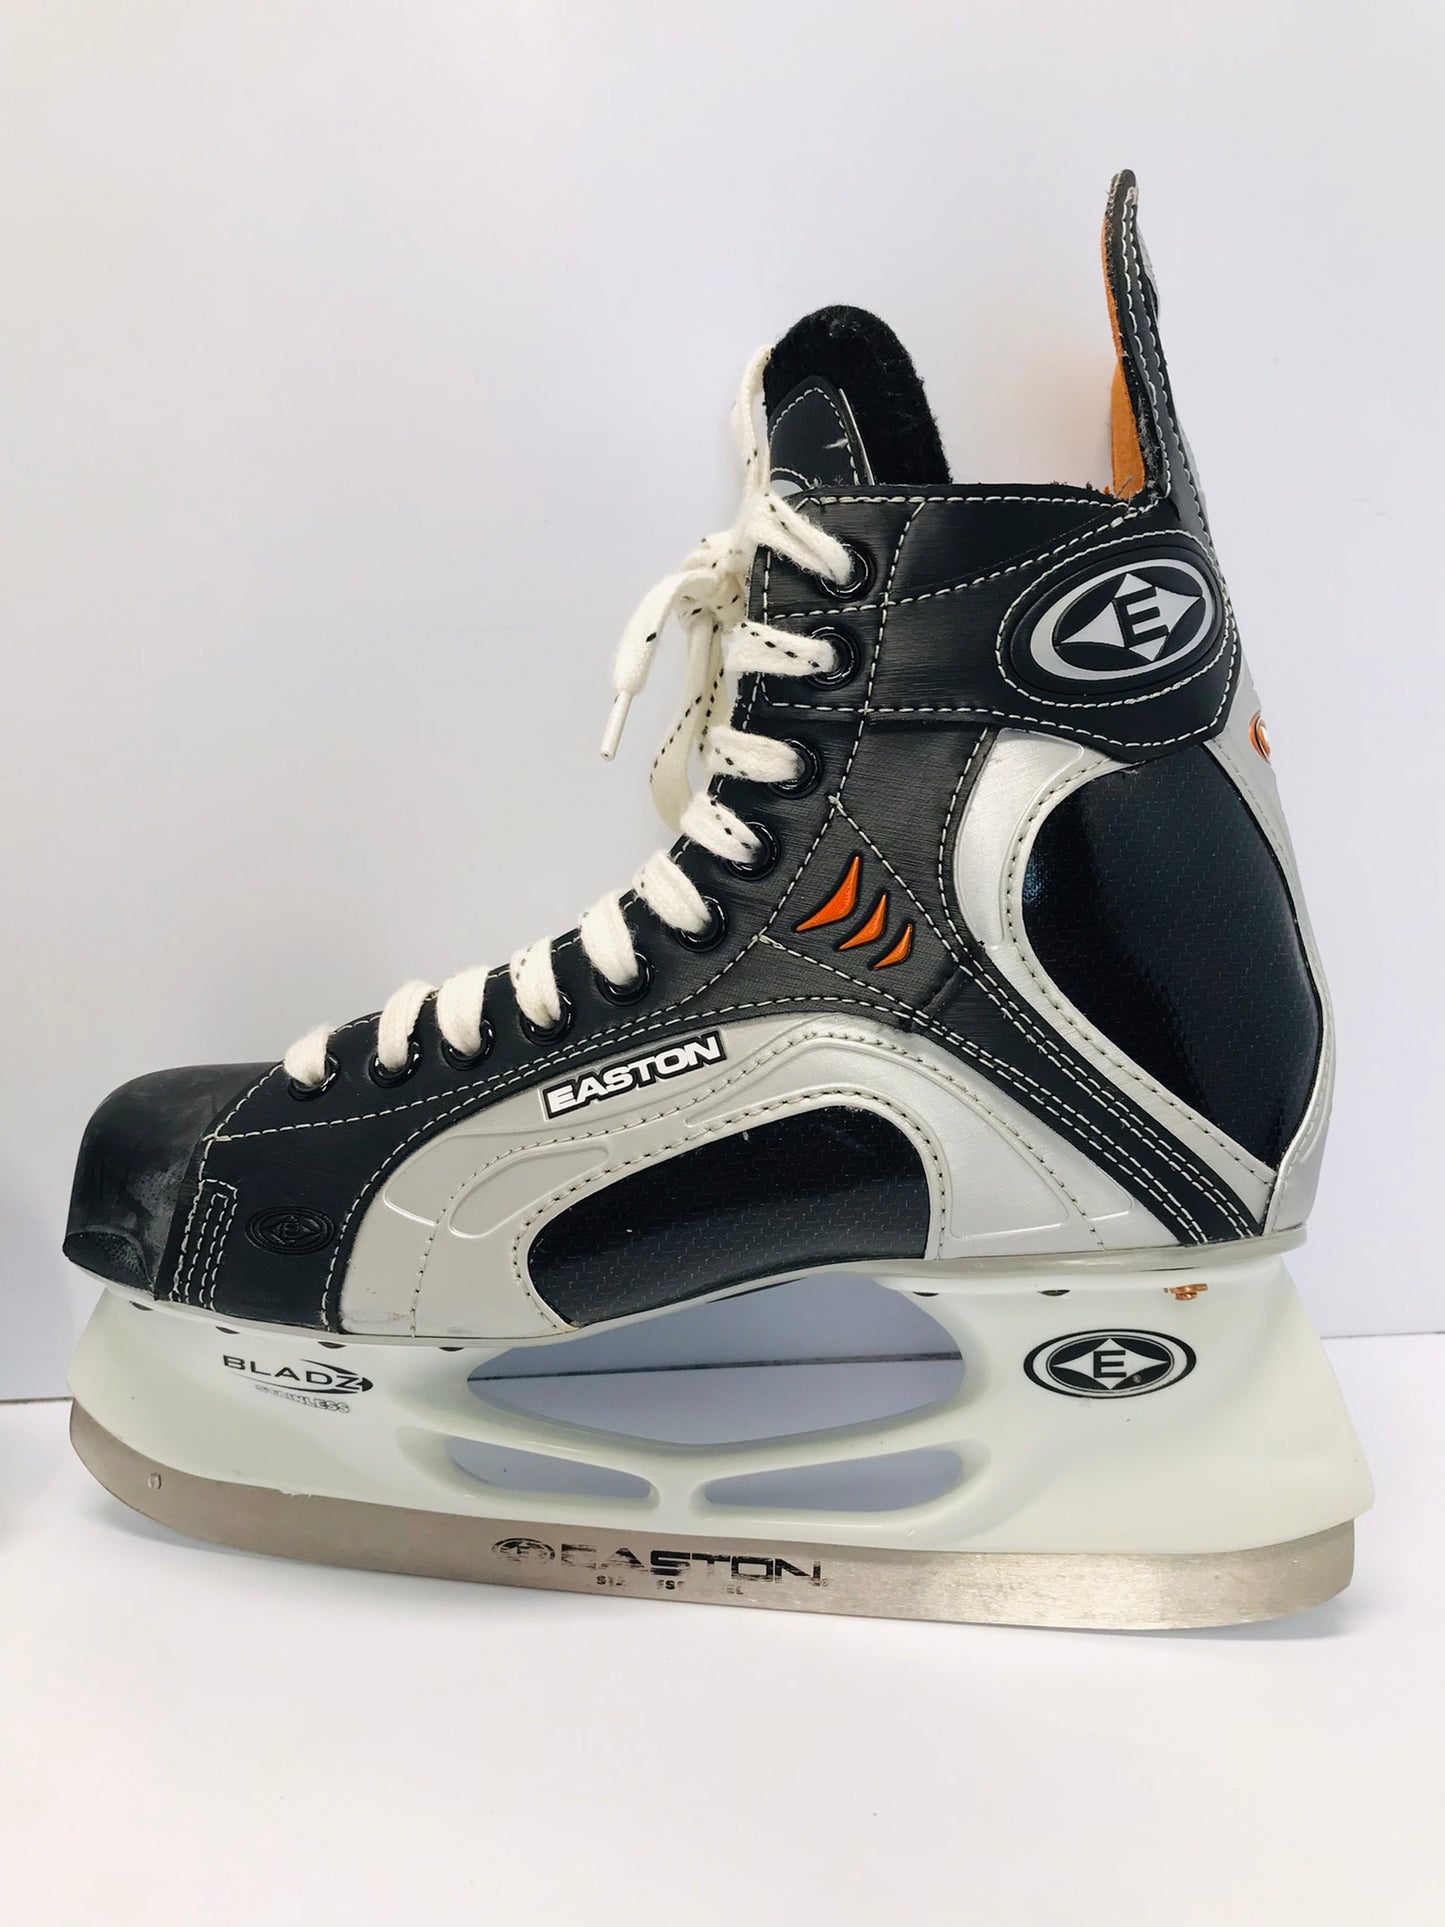 Hockey Skates Men's Size 8 Shoe 6.5 Skate Size Easton Like New